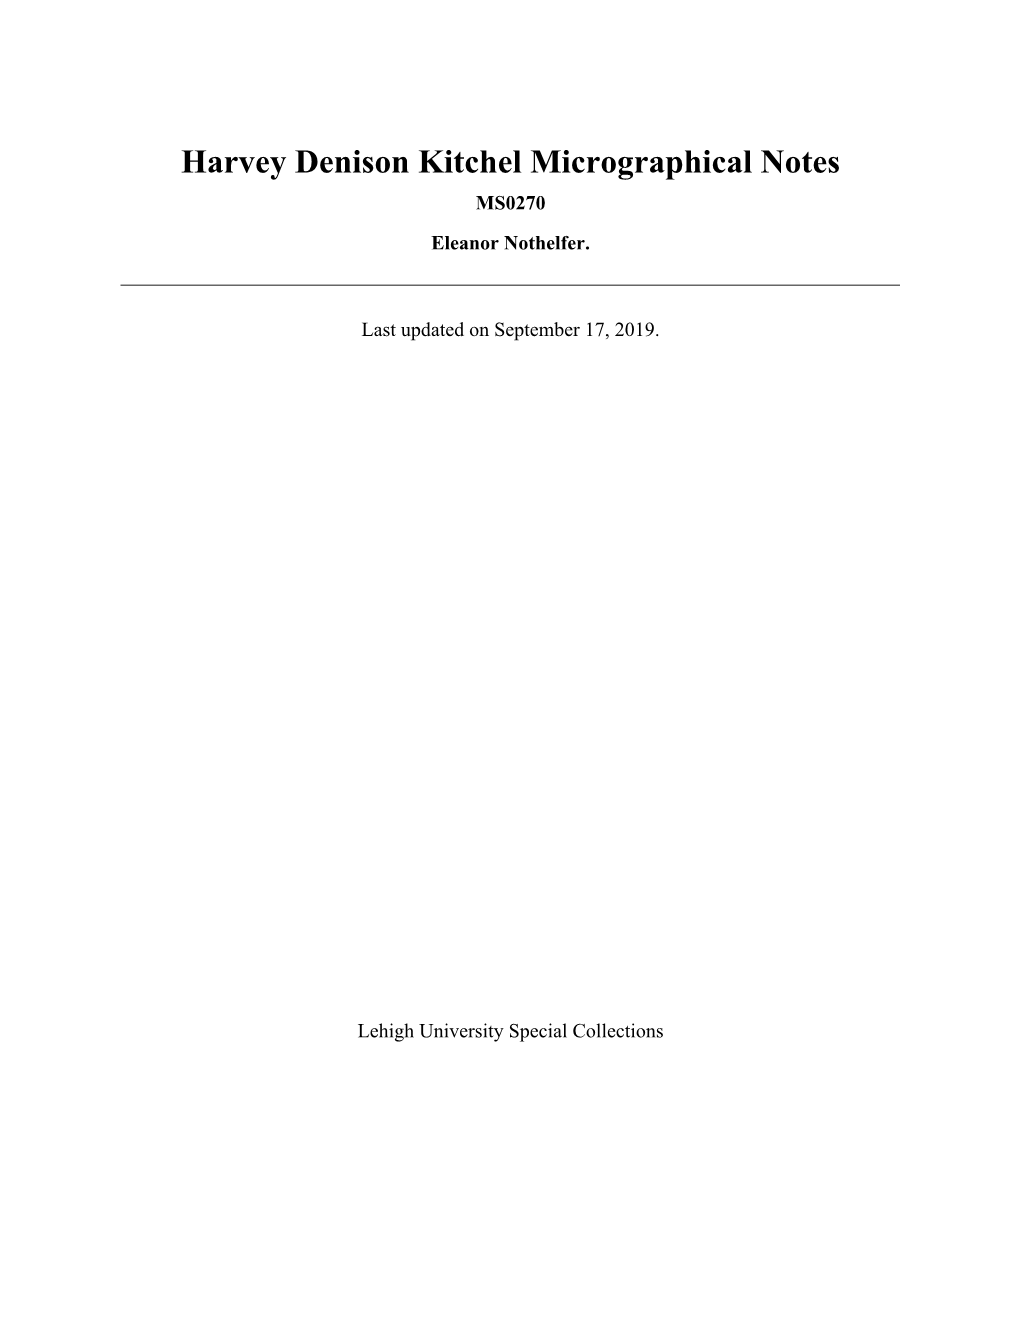 Harvey Denison Kitchel Micrographical Notes MS0270 Eleanor Nothelfer